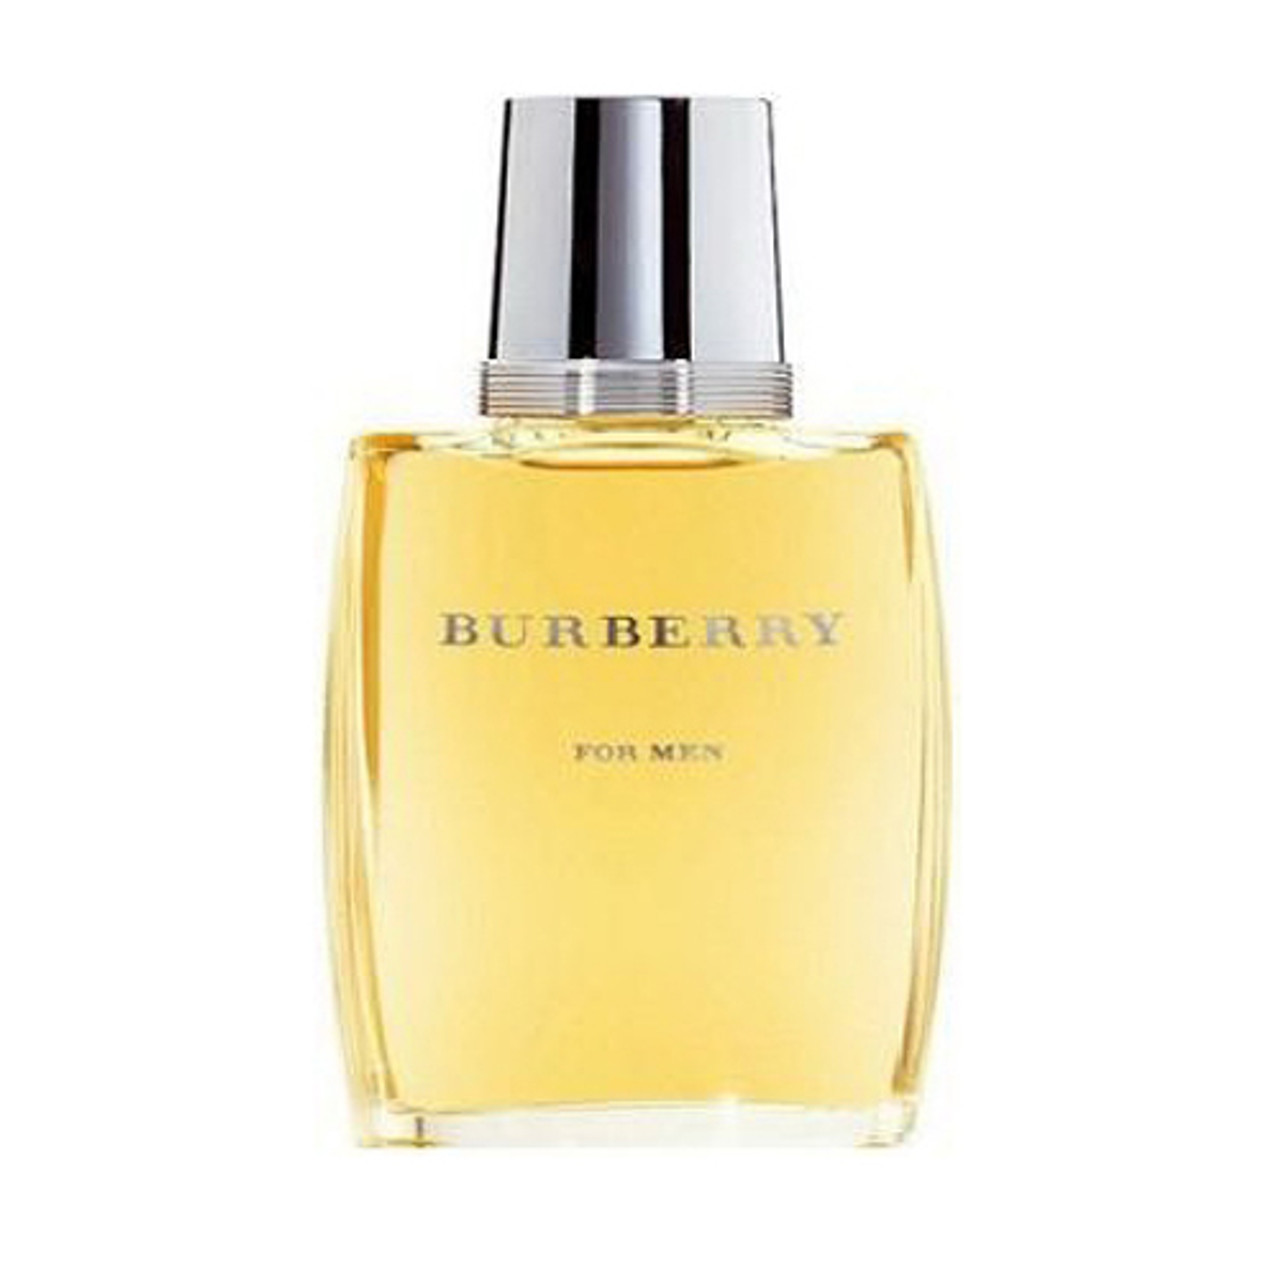 Burberry Classic Perfume For Men Eau De Toilette Spray  Oz -  